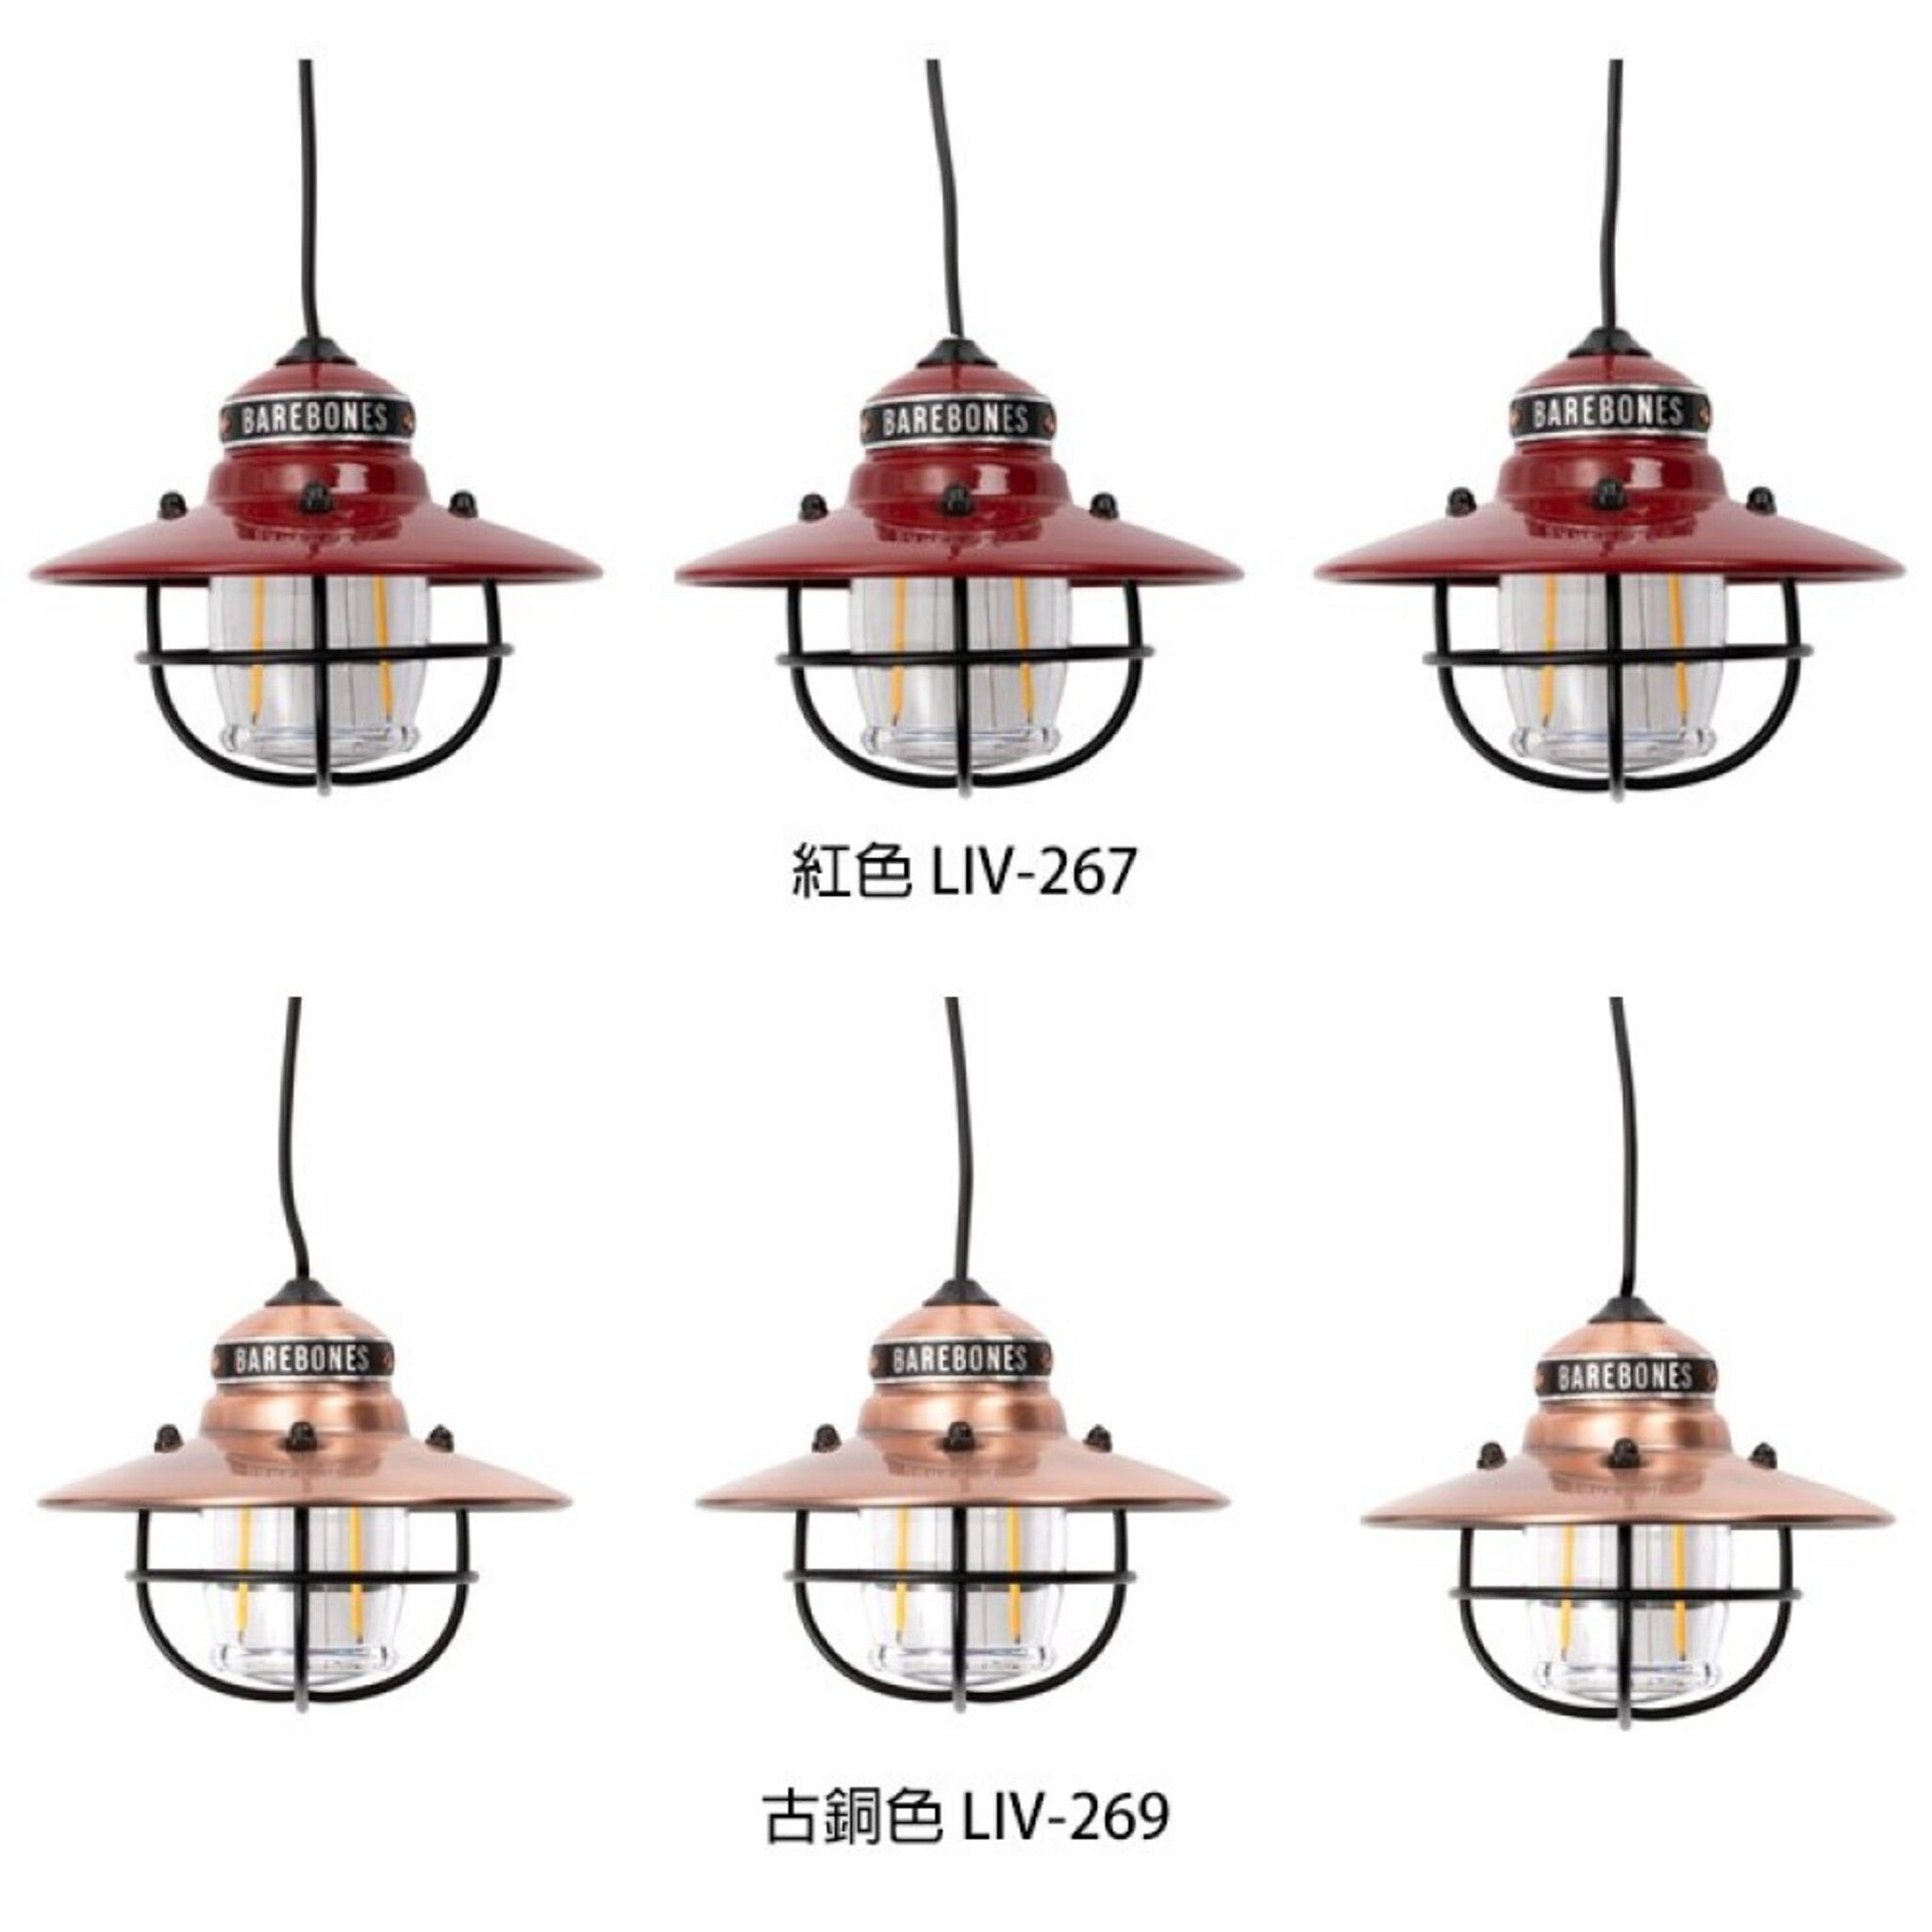 Barebones Edison String Lights 串連垂吊營燈 霧黑 LIV-265